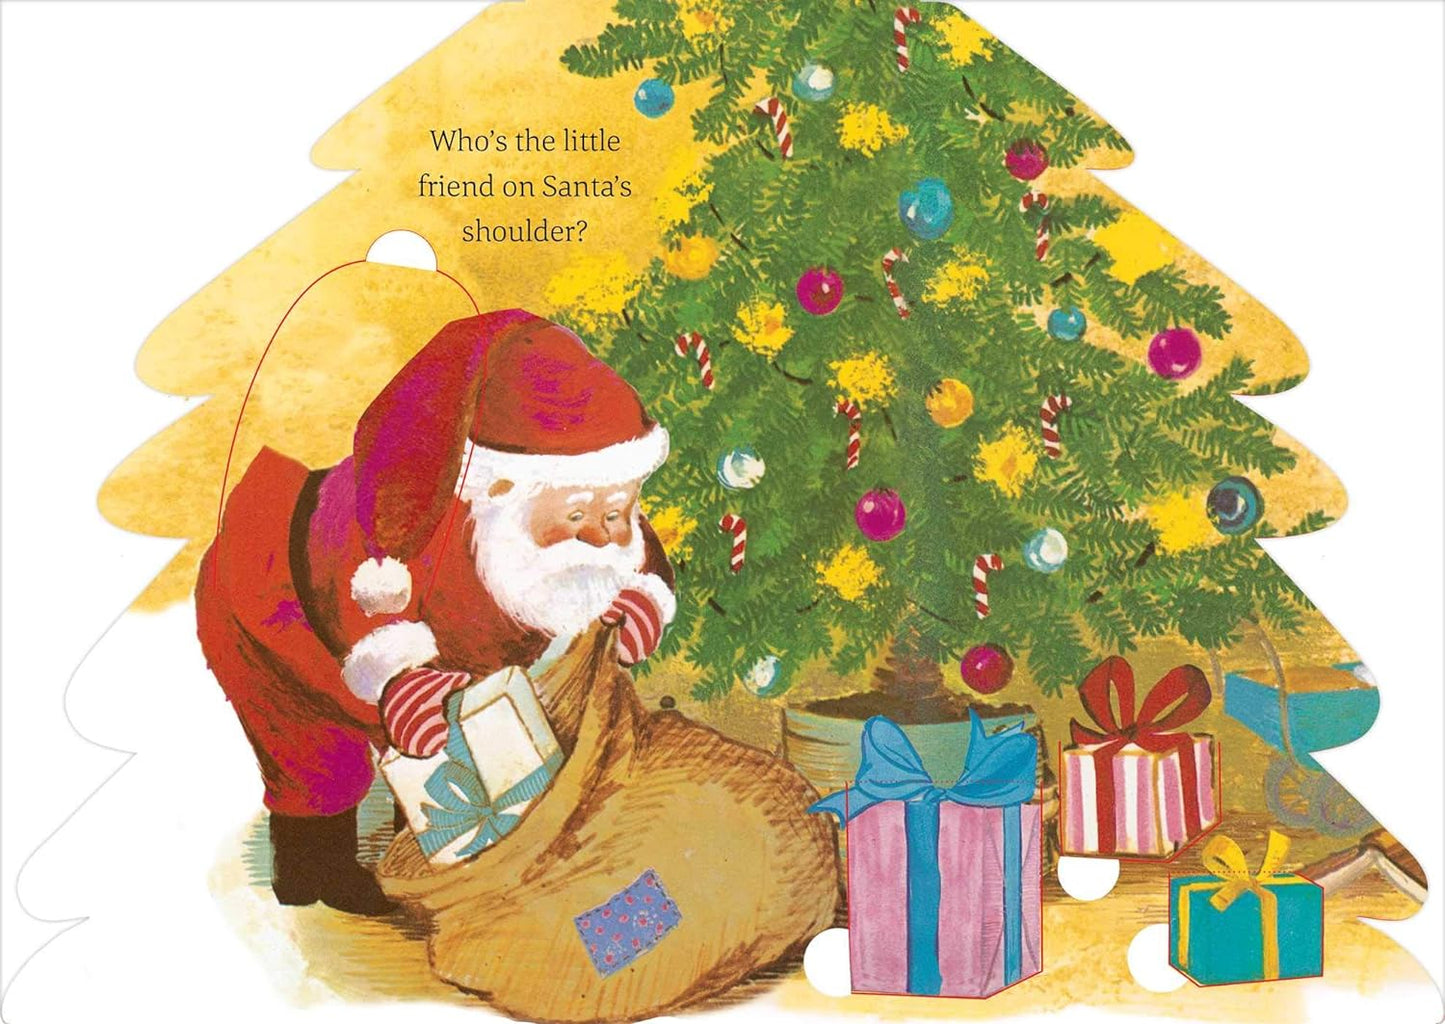 Santa Mouse Christmas Surprise Board Book